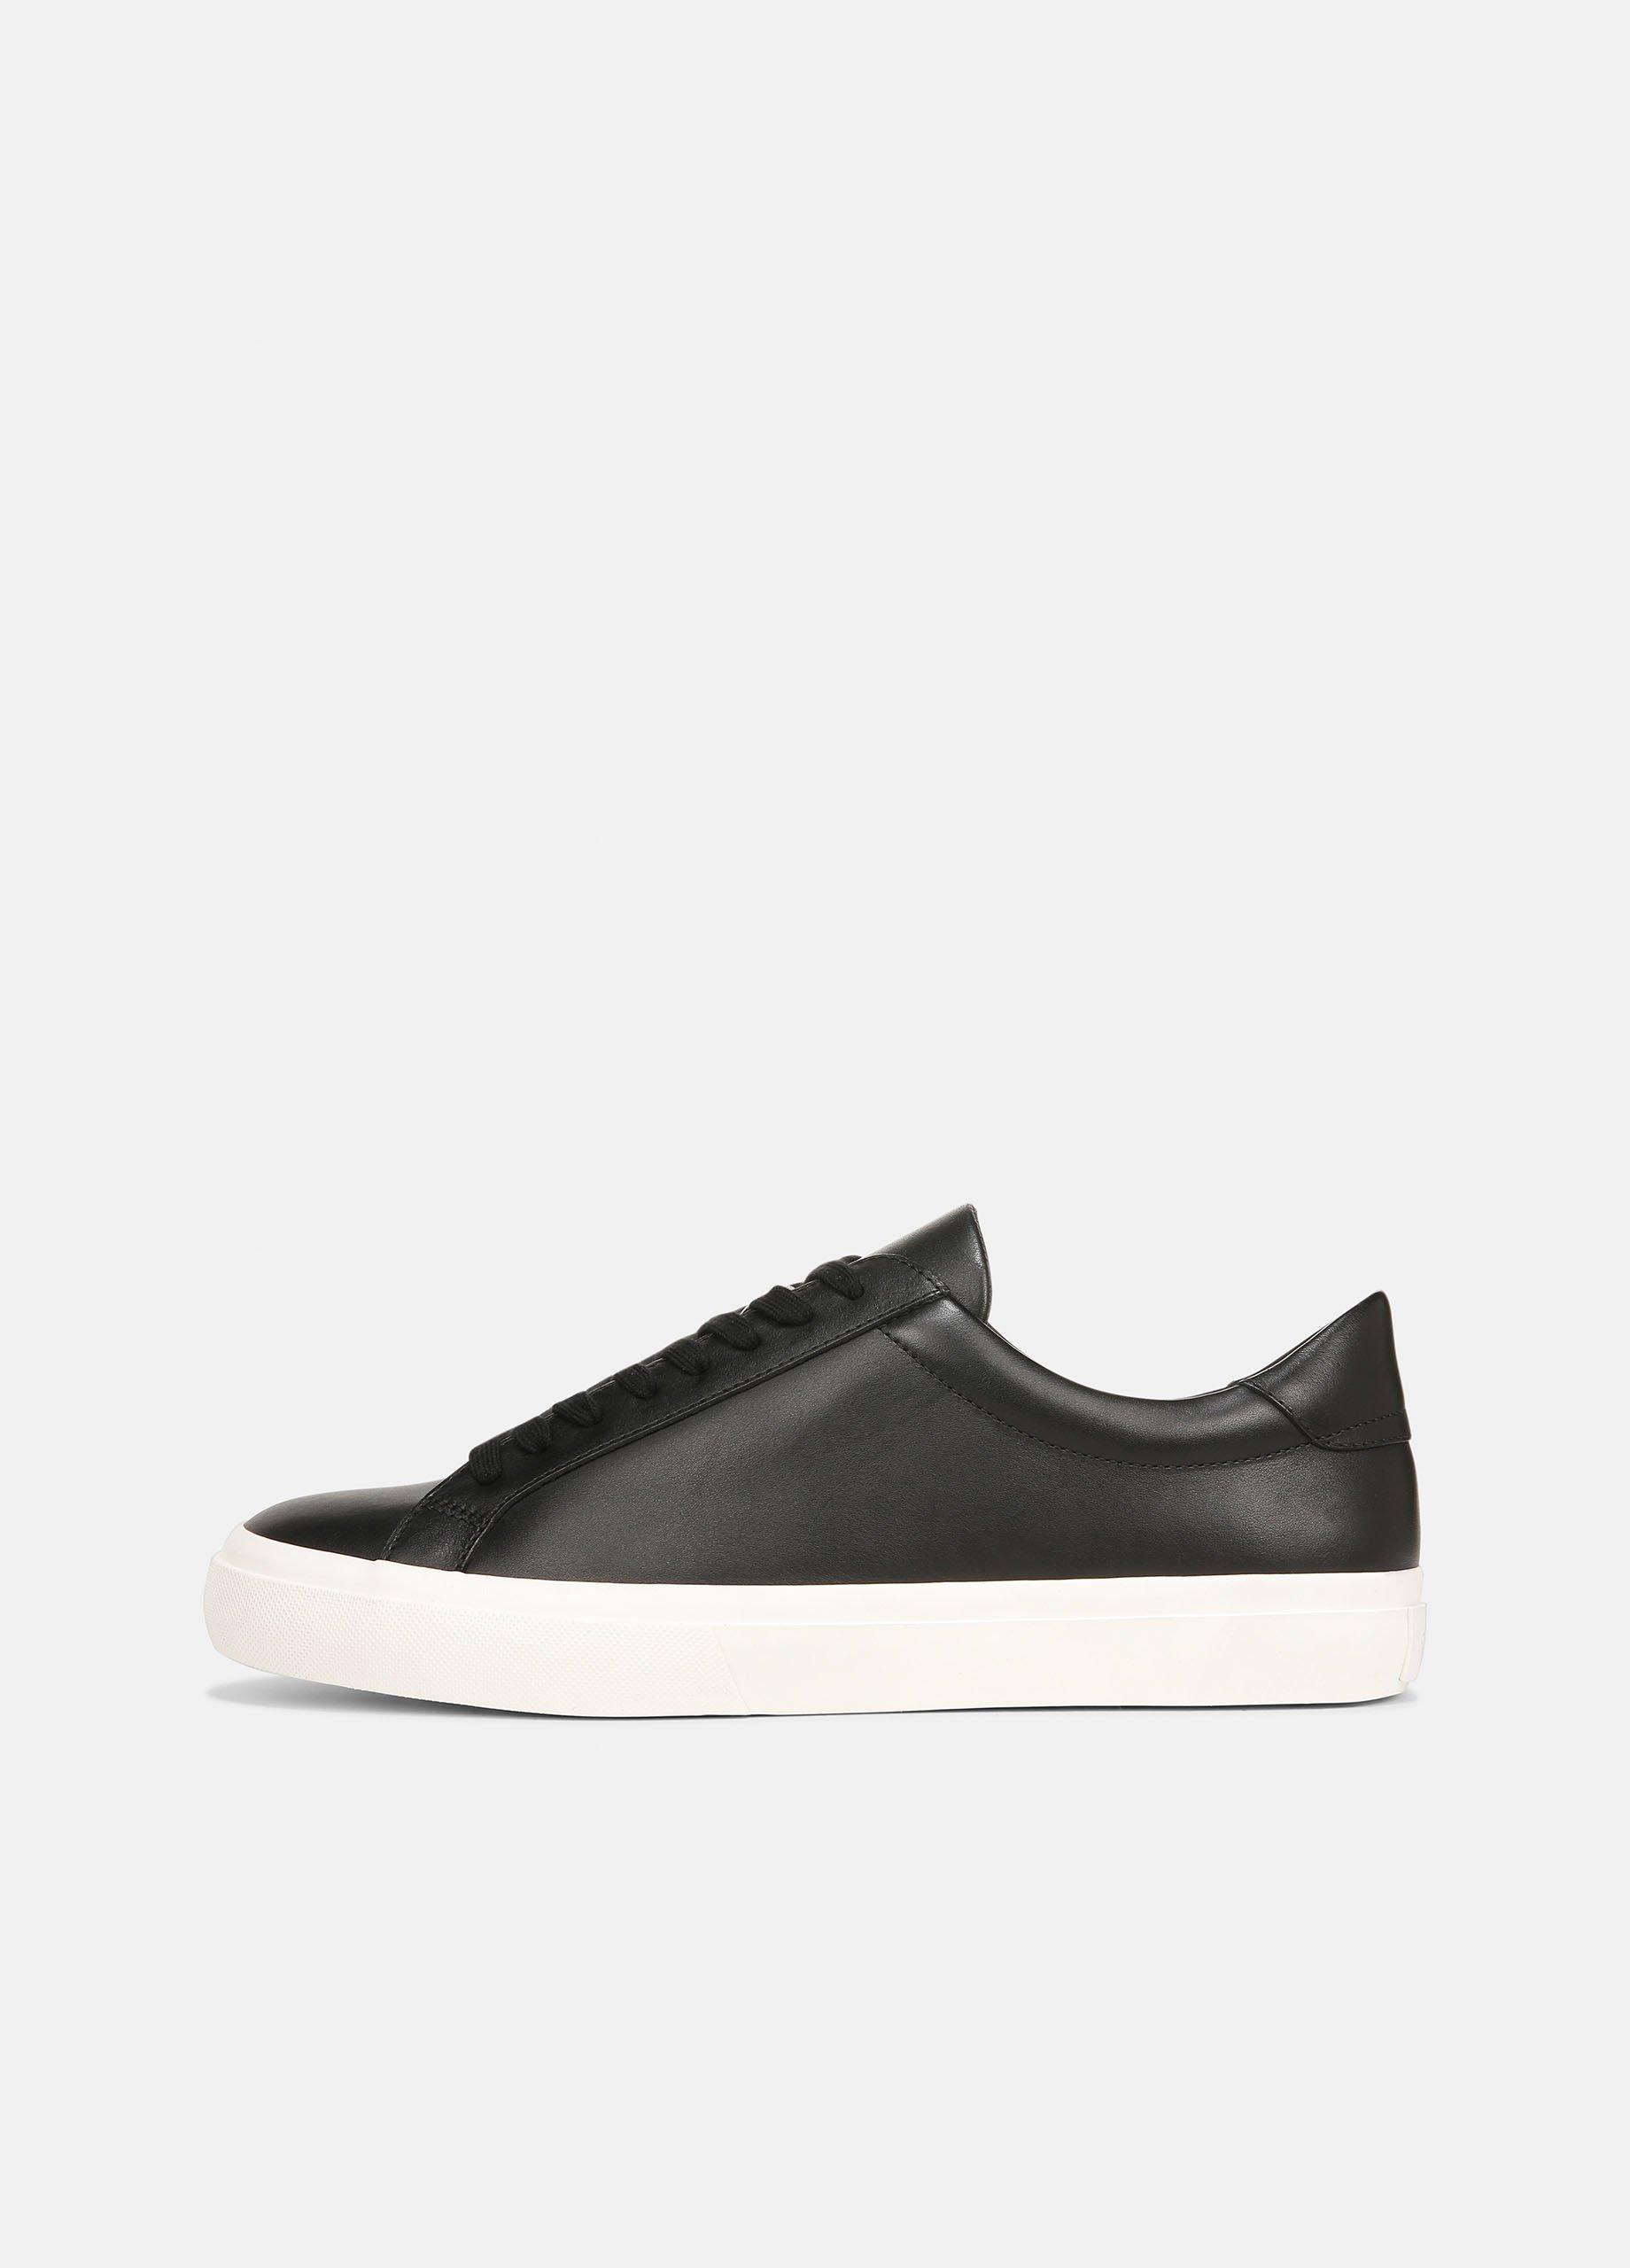 Fulton Leather Sneaker, Black, Size 11 Vince